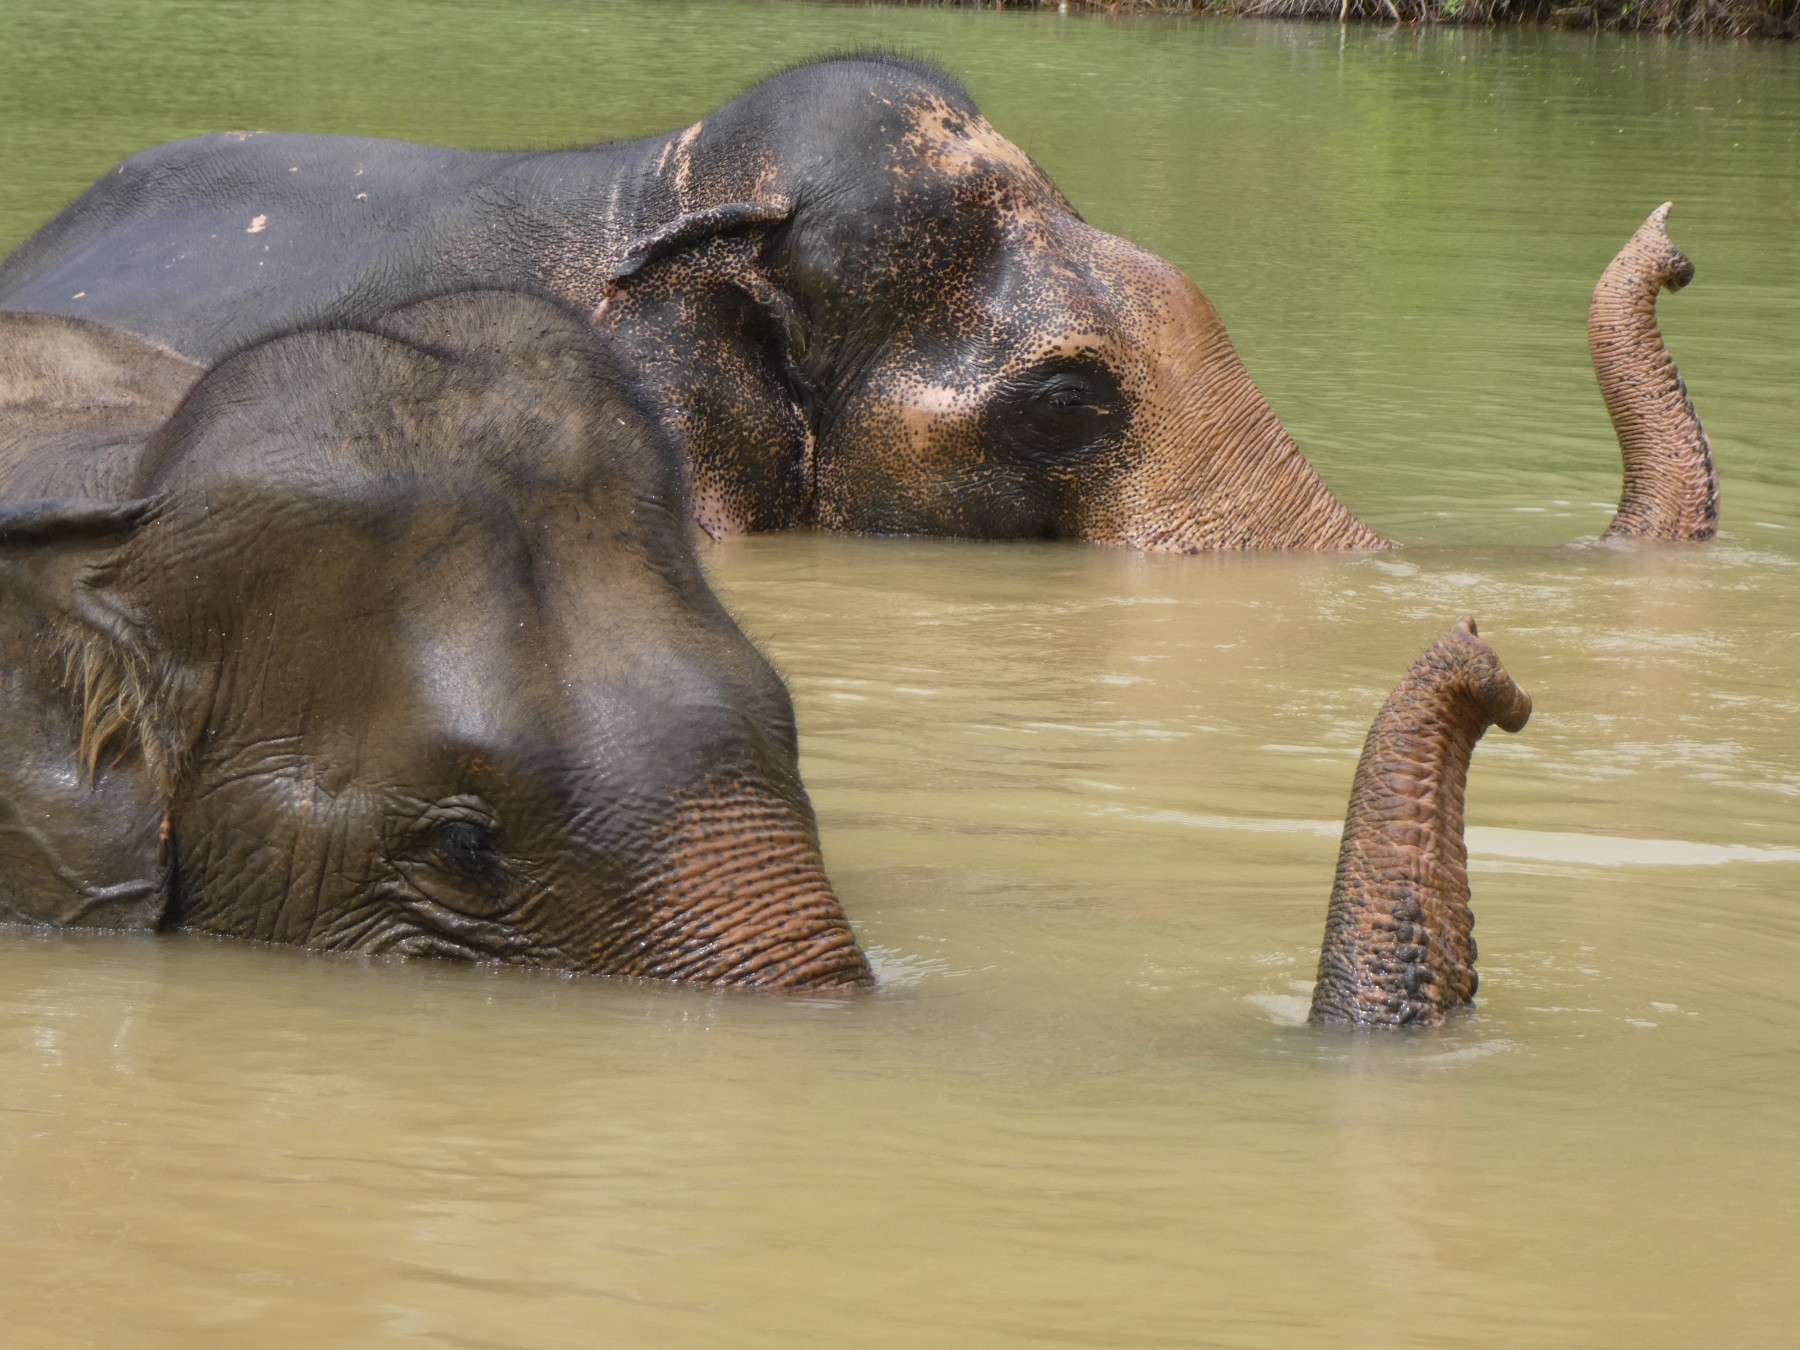 Elephants Chok and Jahn at the Following Giants elephant-friendly venue - World Animal Protection